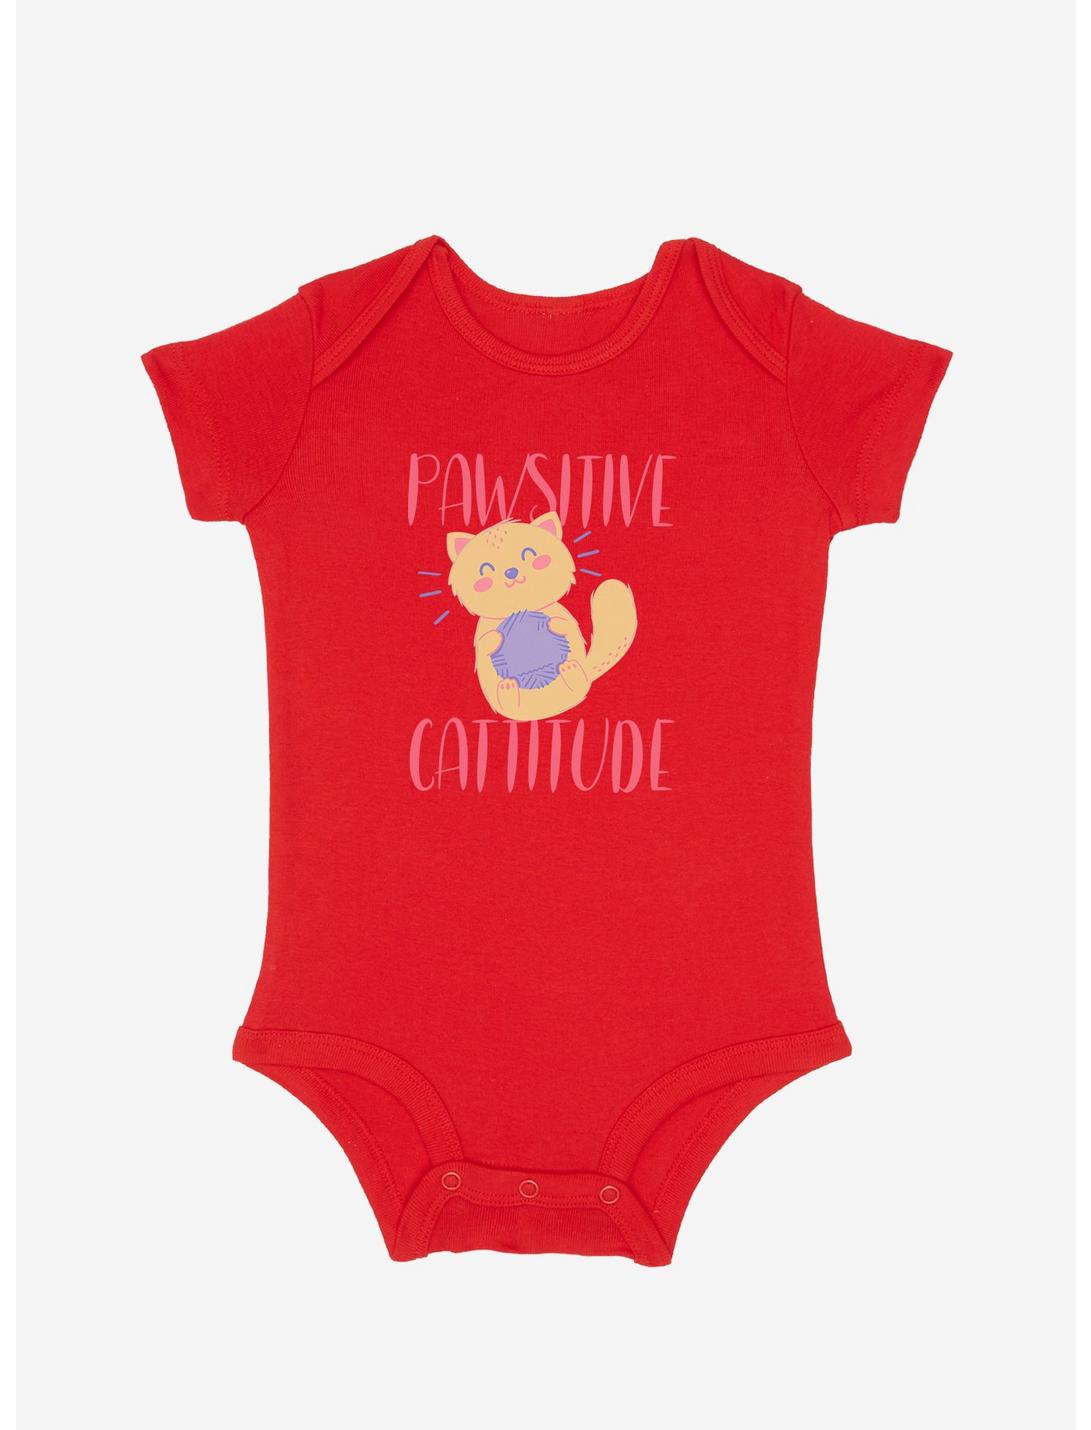 Pawsitive Catitude Infant Bodysuit, RED, hi-res